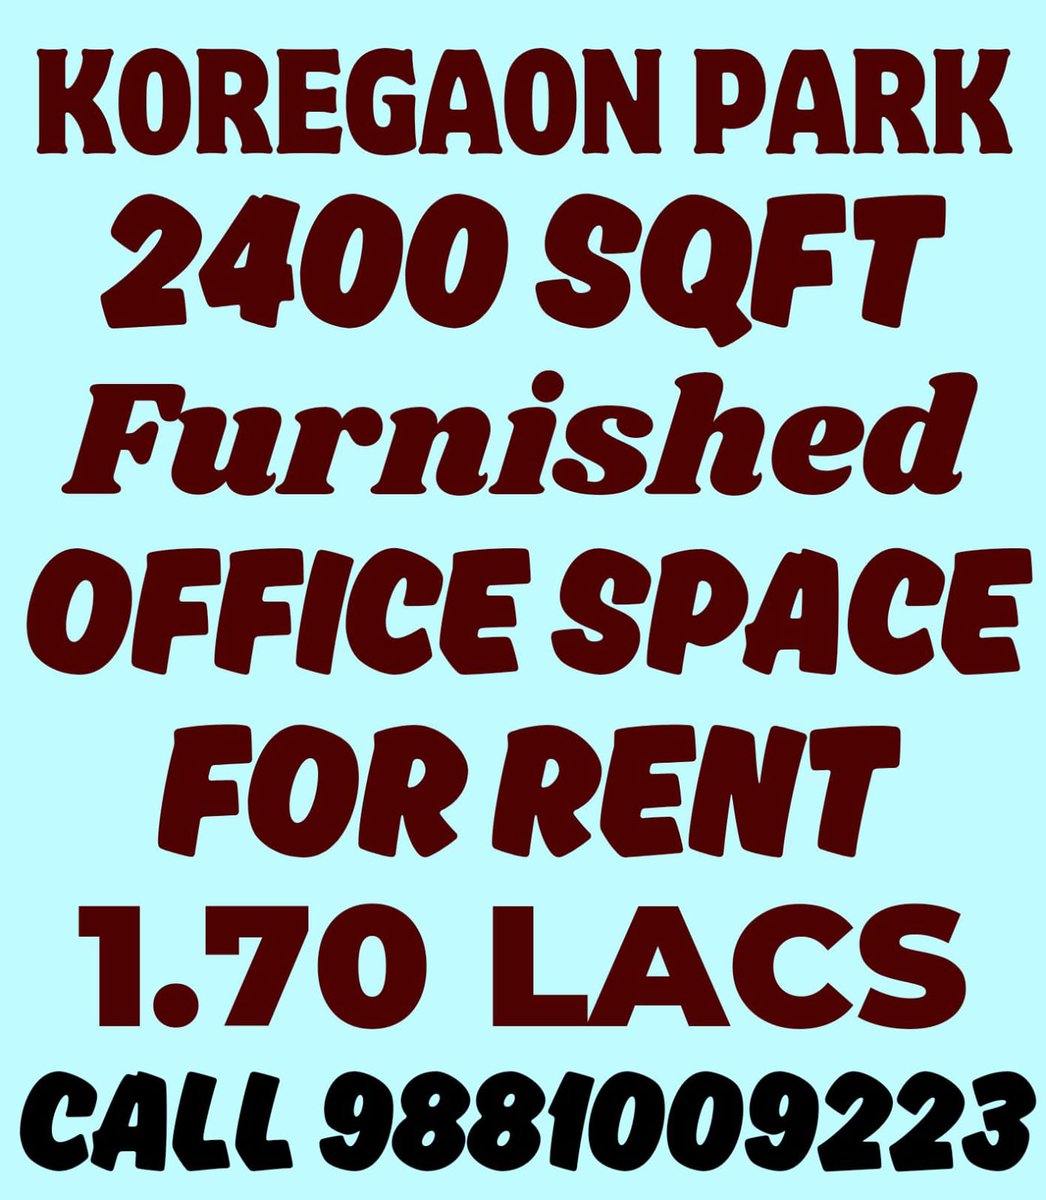 KOREGAON PARK 2400 SQFT FURNISHED OFFICE SPACE FOR RENT 1.70 LACS CALL 988109223
- #KoregaonParkOfficeSpace
- #OfficeSpaceForRent
- #FurnishedOffice
- #OfficeSpace
- #CommercialRealEstate
- #PuneProperties
- #WorkspaceForRent
- #OfficeForLease
- #BusinessSpace